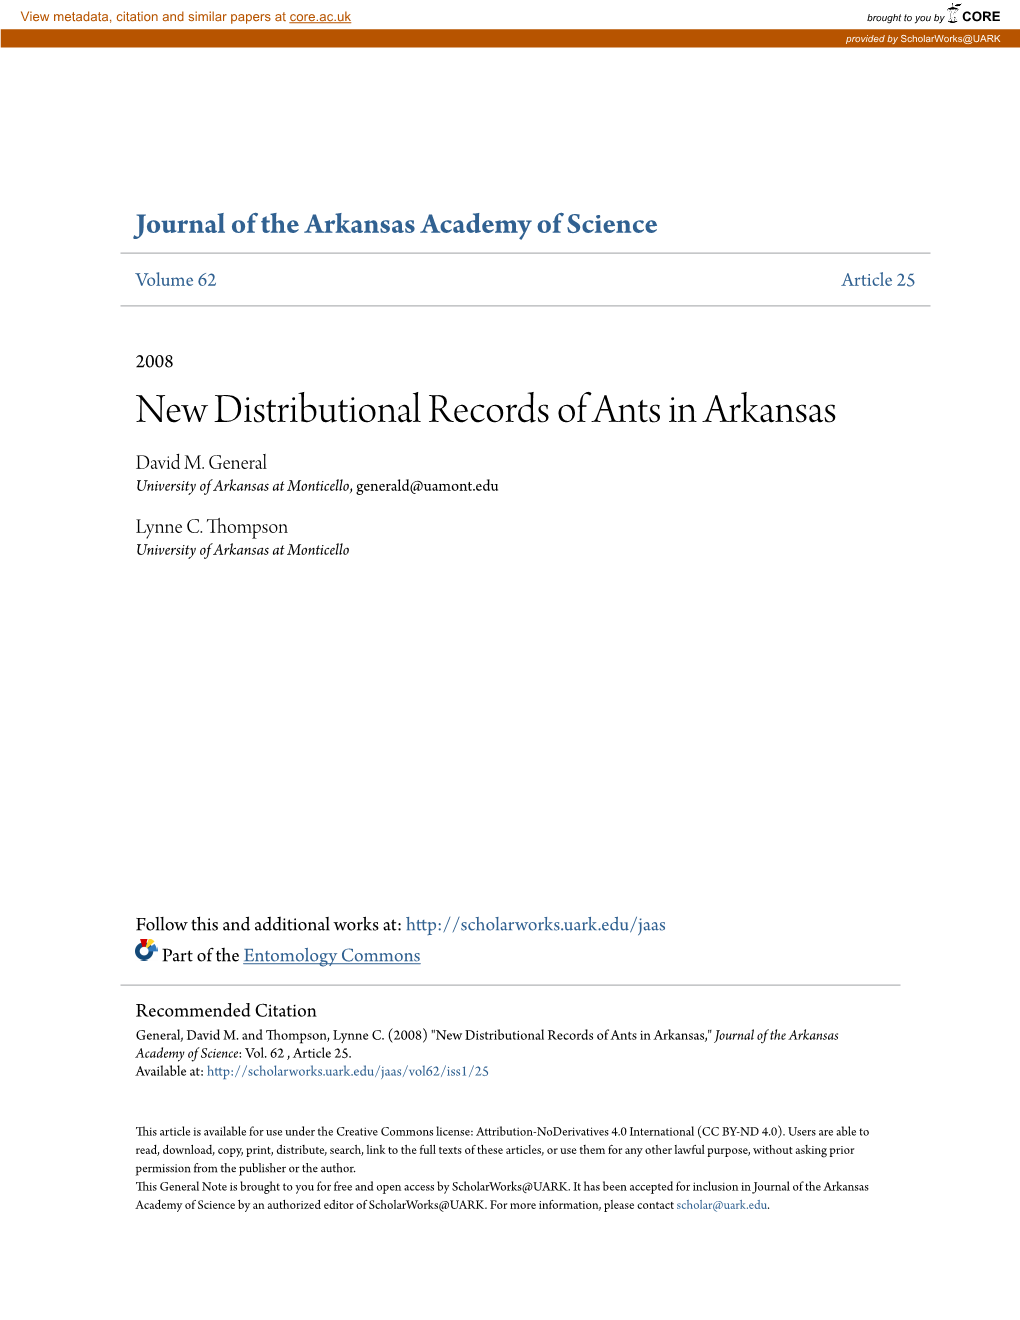 New Distributional Records of Ants in Arkansas David M